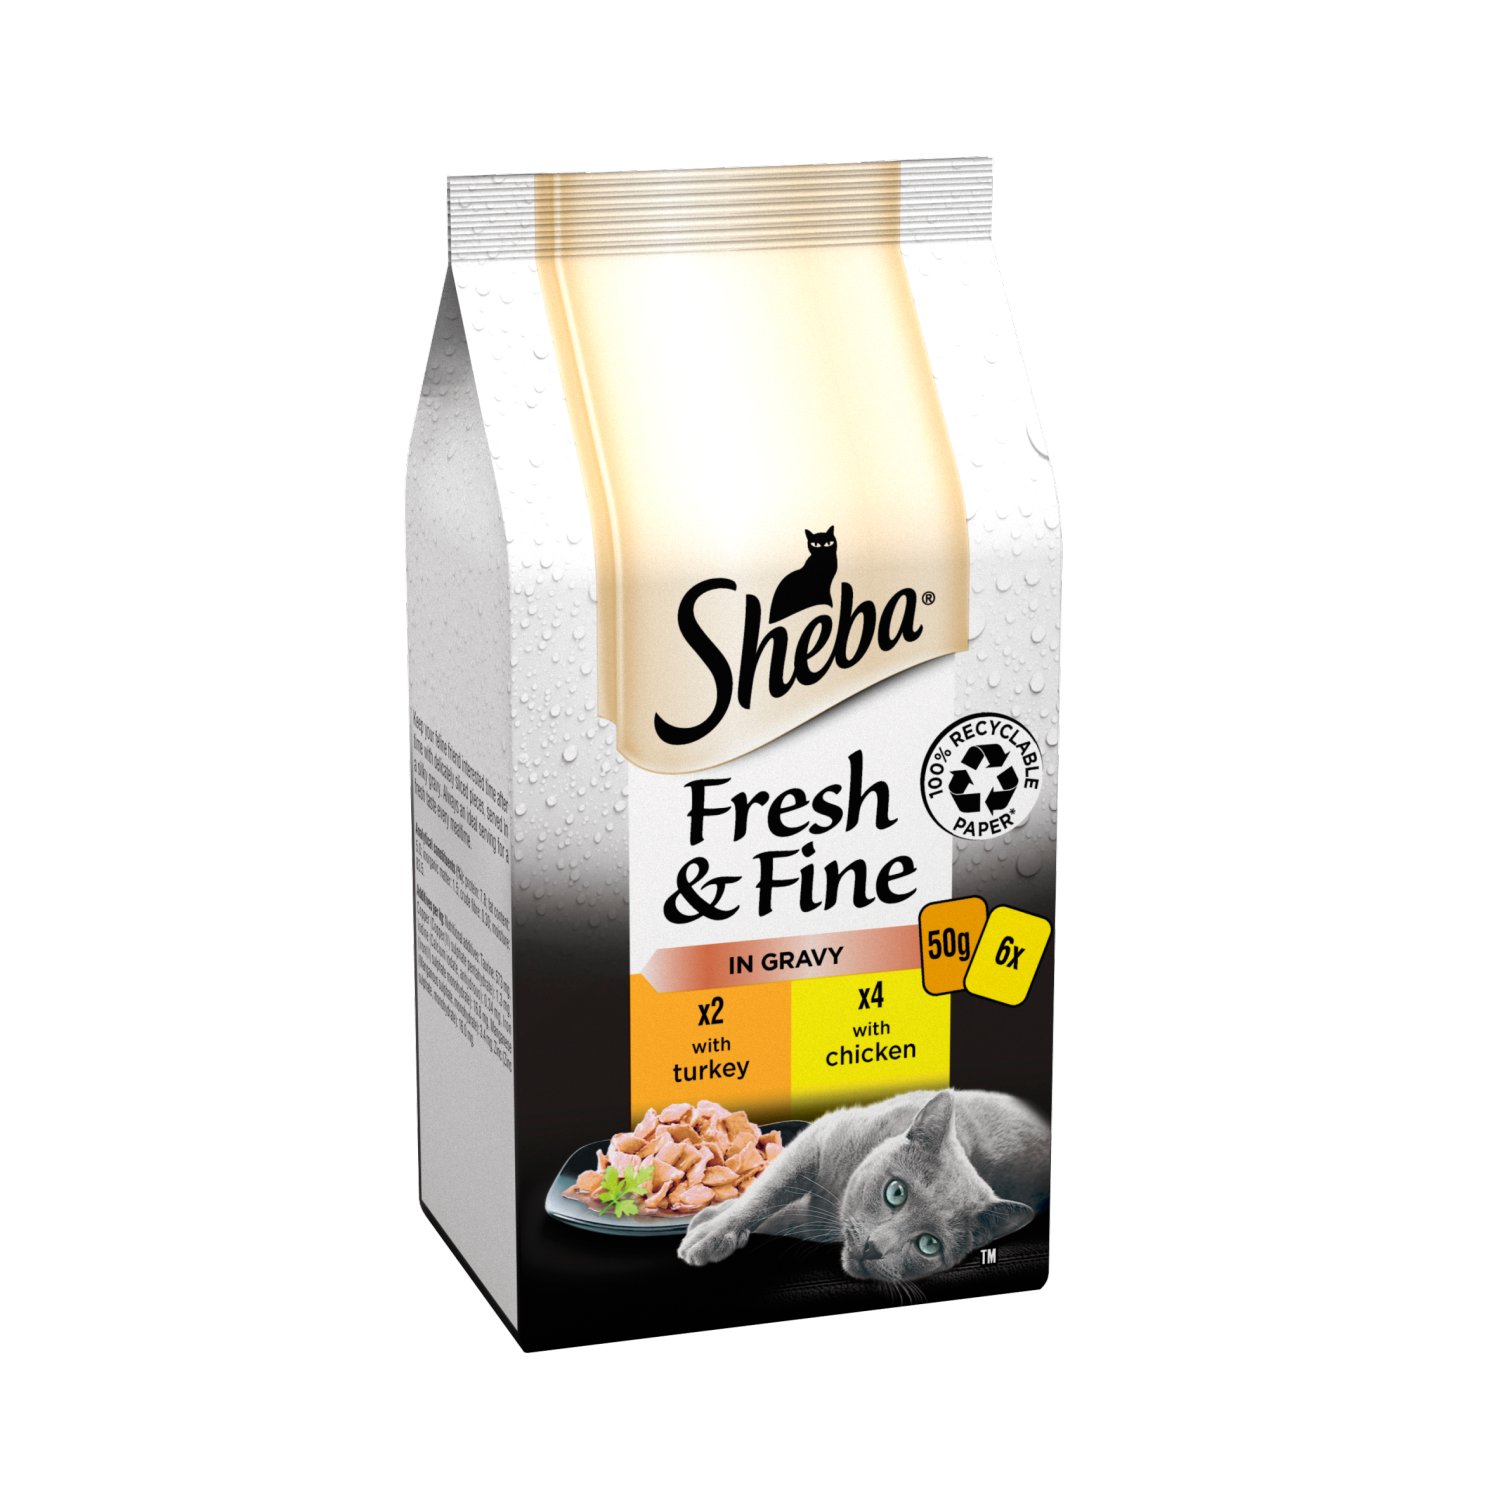 Sheba Fresh & Fine Poultry in Gravy Cat Food 6 Pack (300 g)